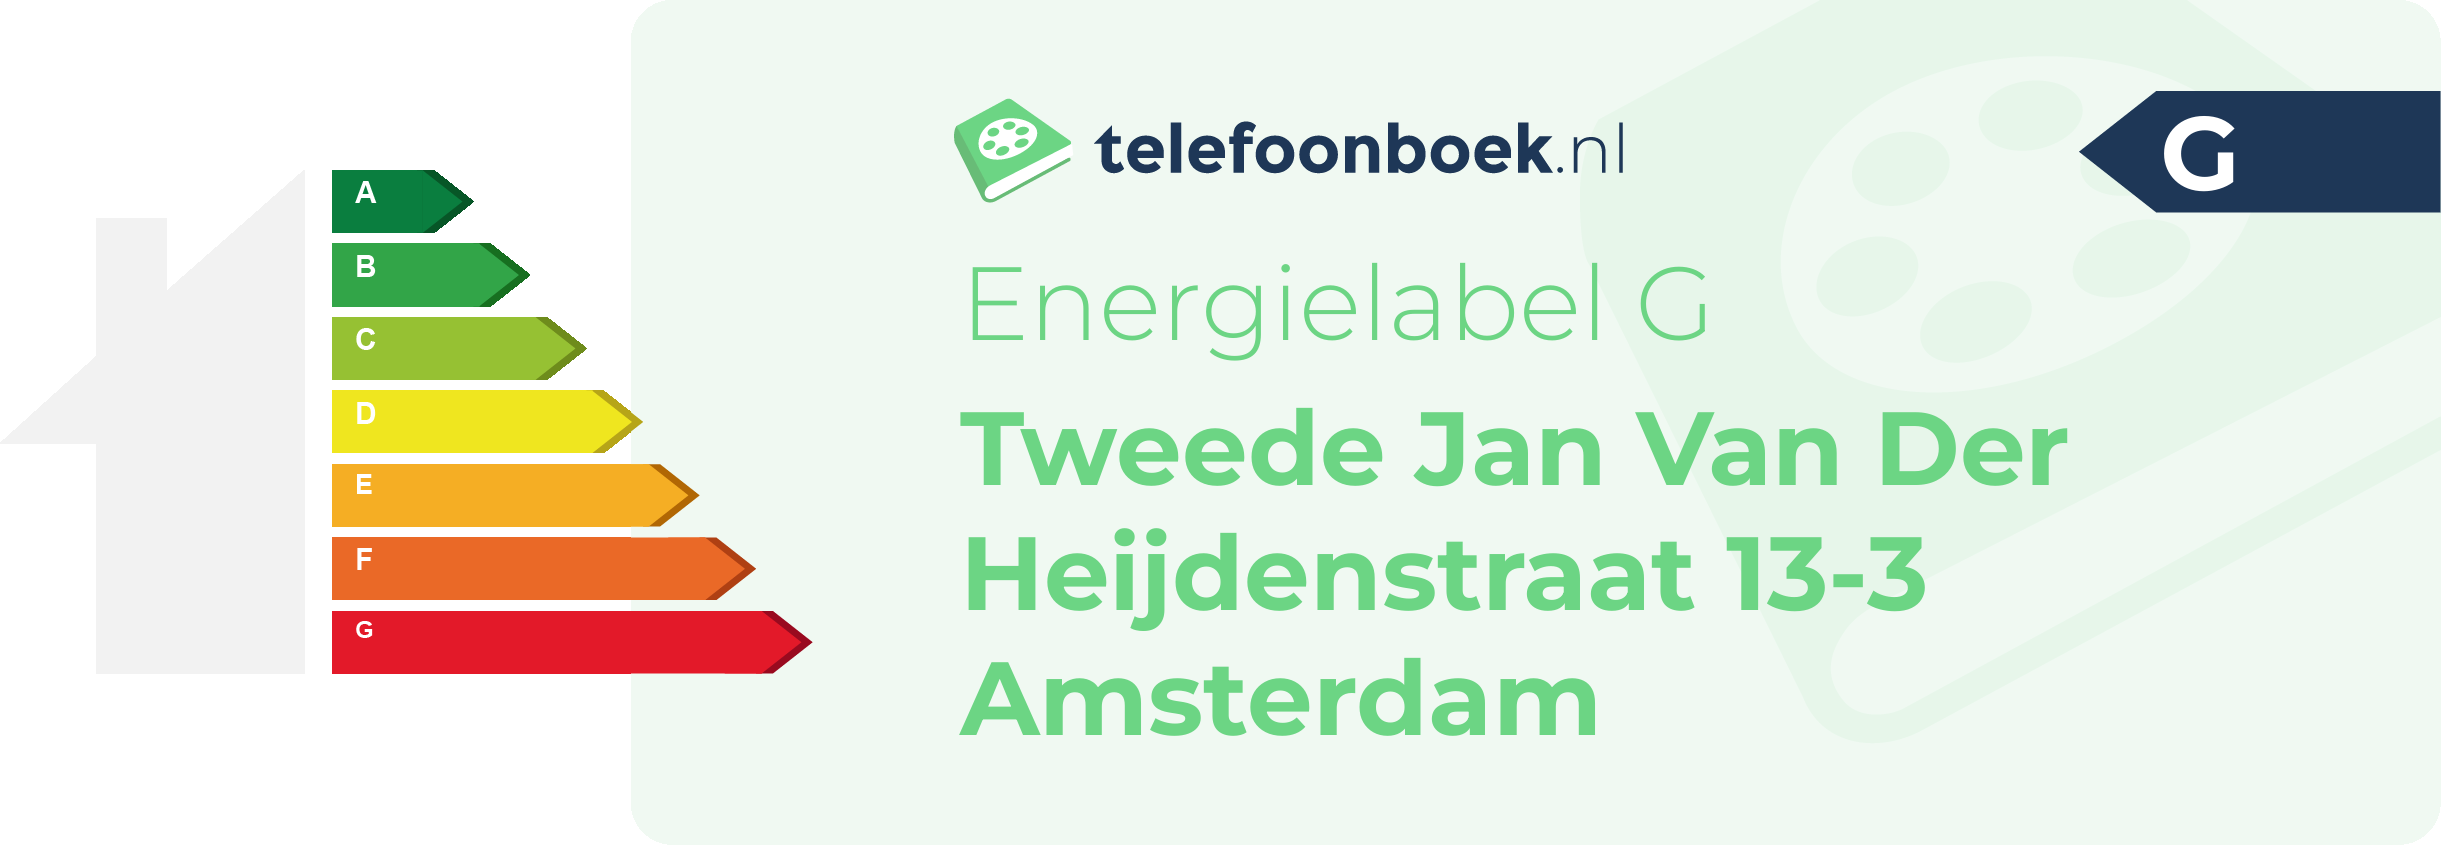 Energielabel Tweede Jan Van Der Heijdenstraat 13-3 Amsterdam